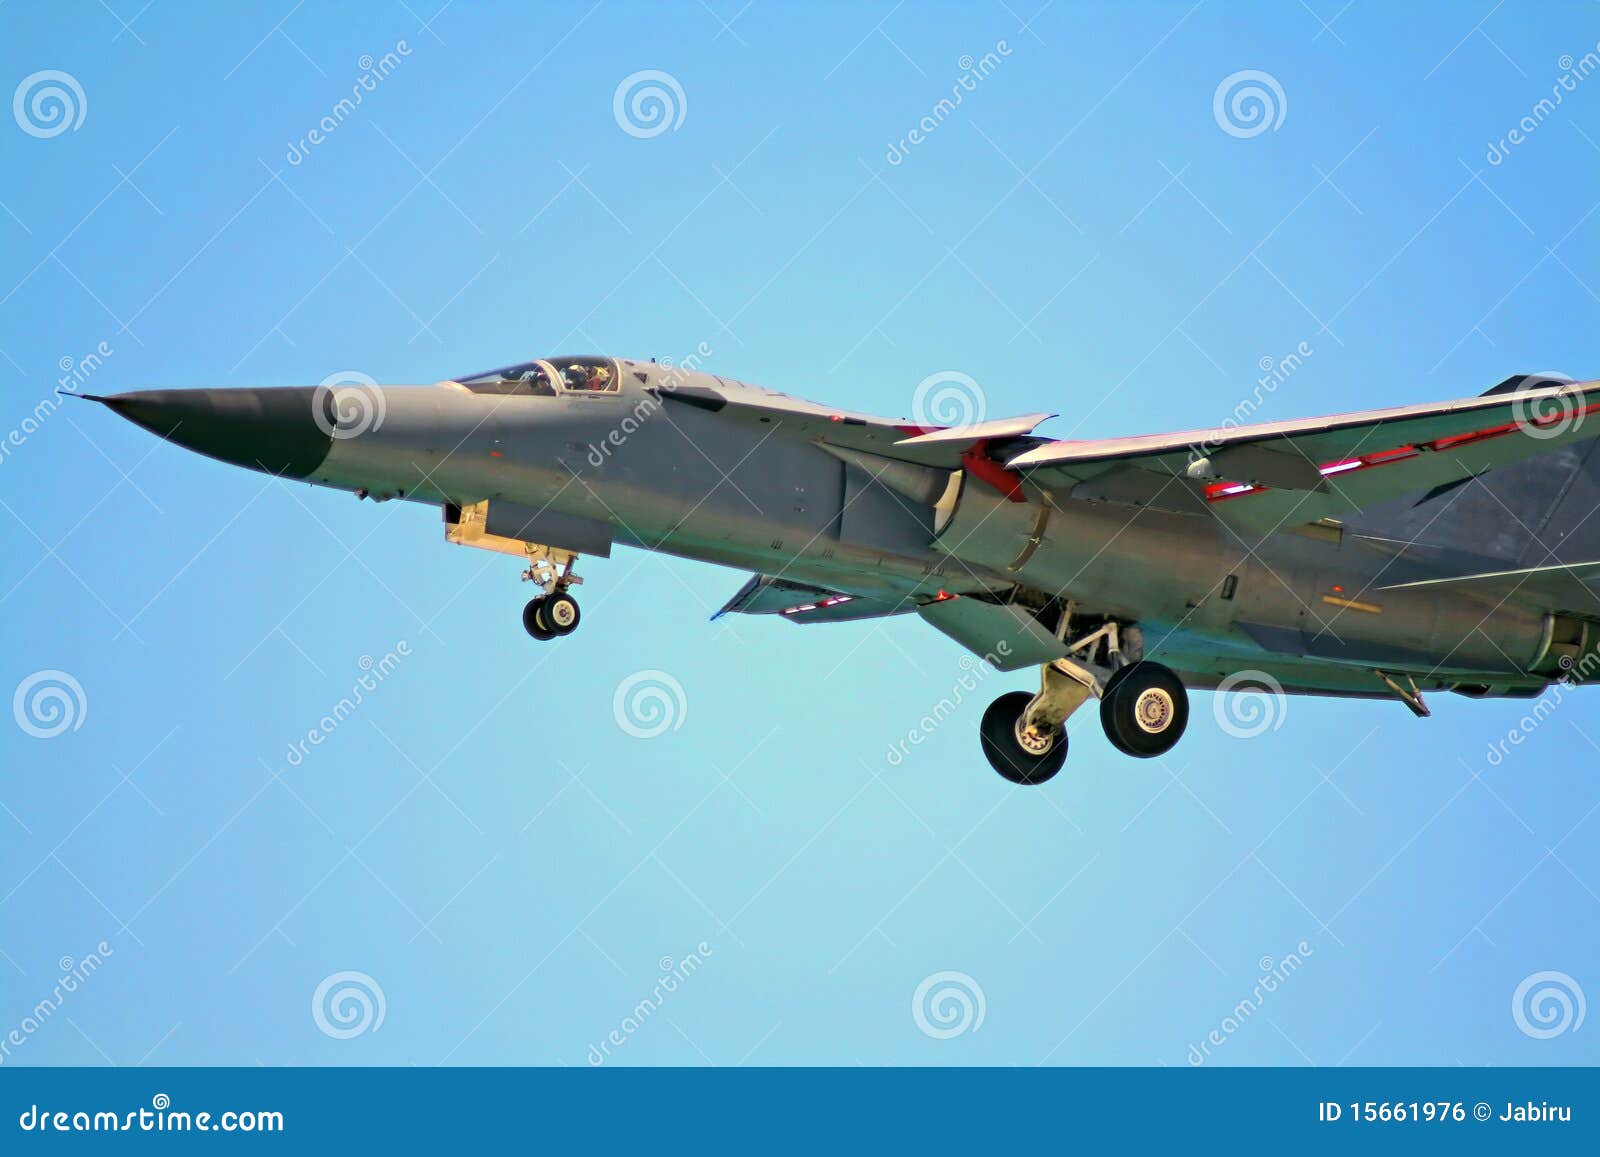 general dynamics f 111 strategic bomber